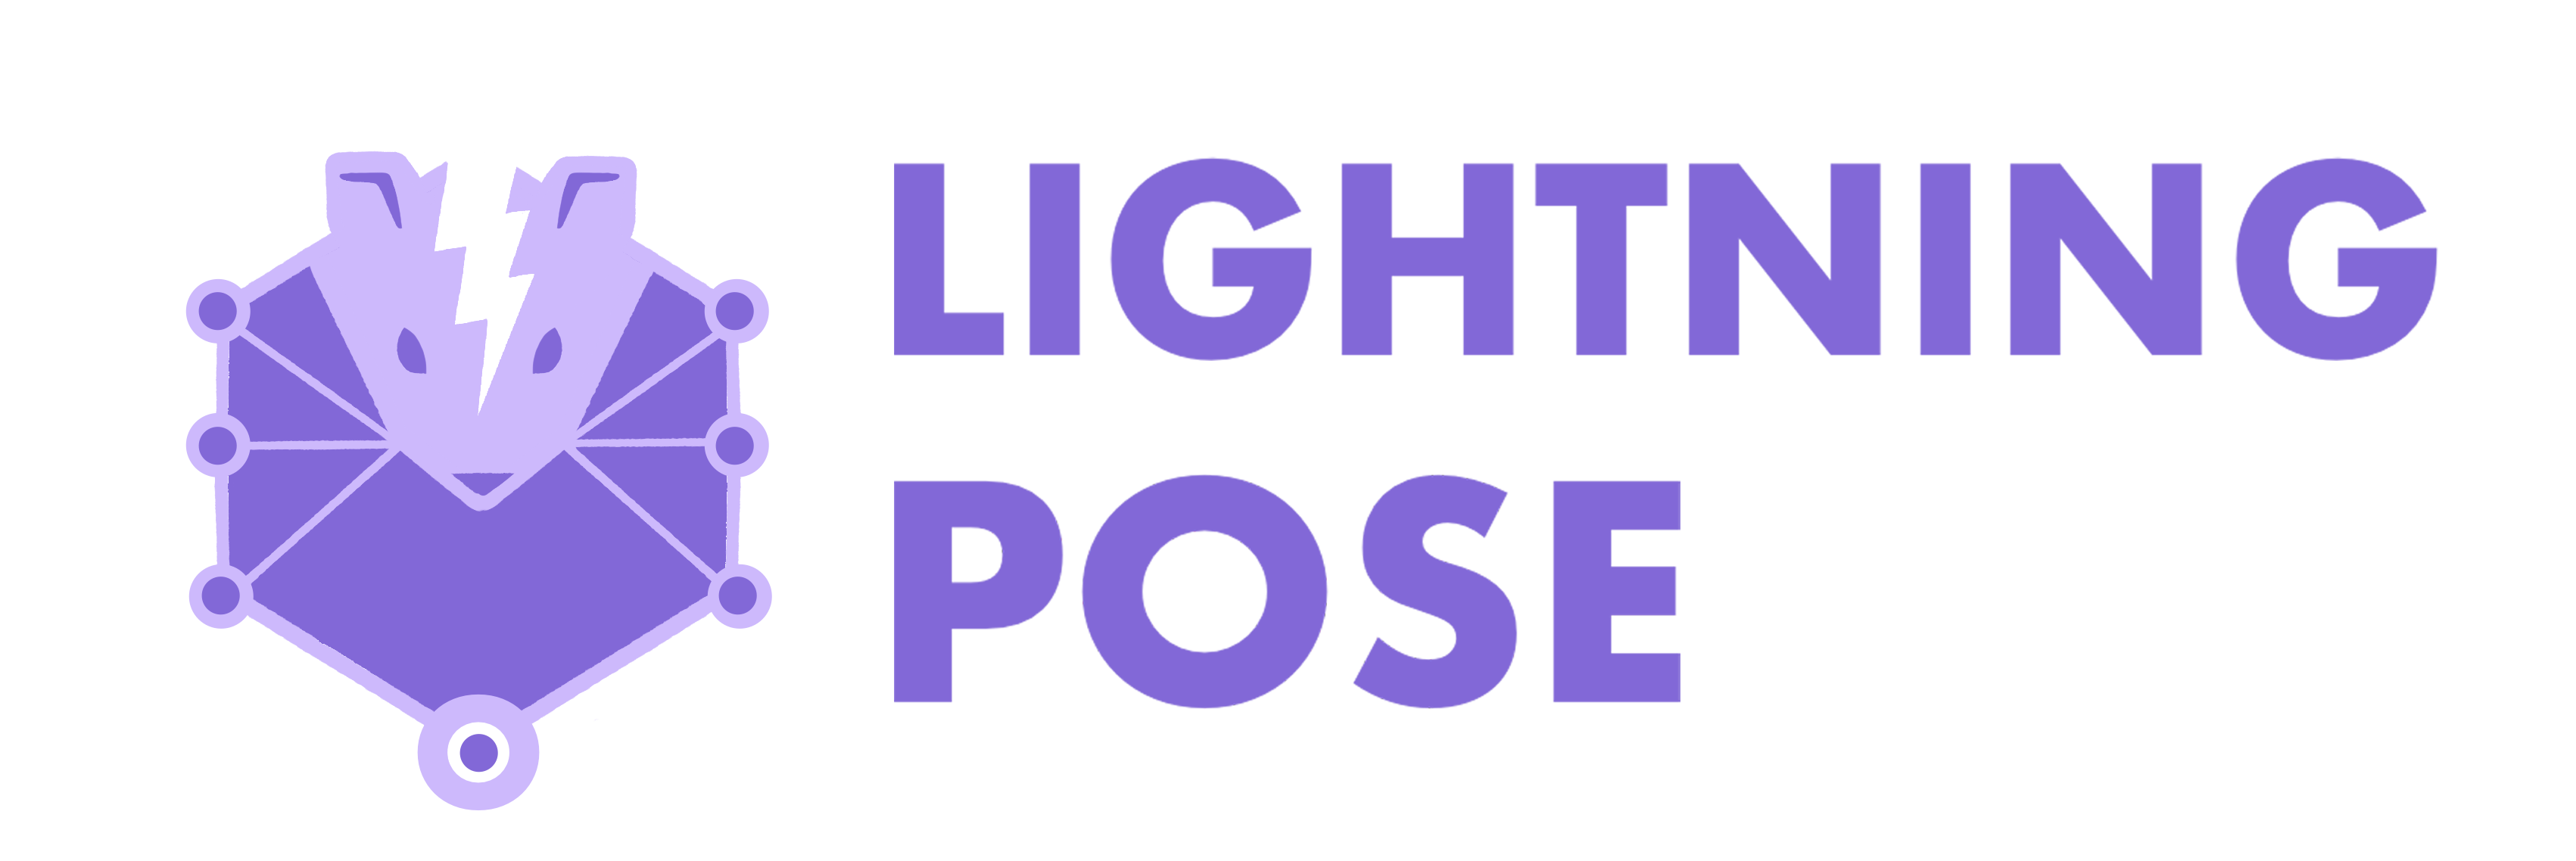 _images/LightningPose_horizontal_light.png